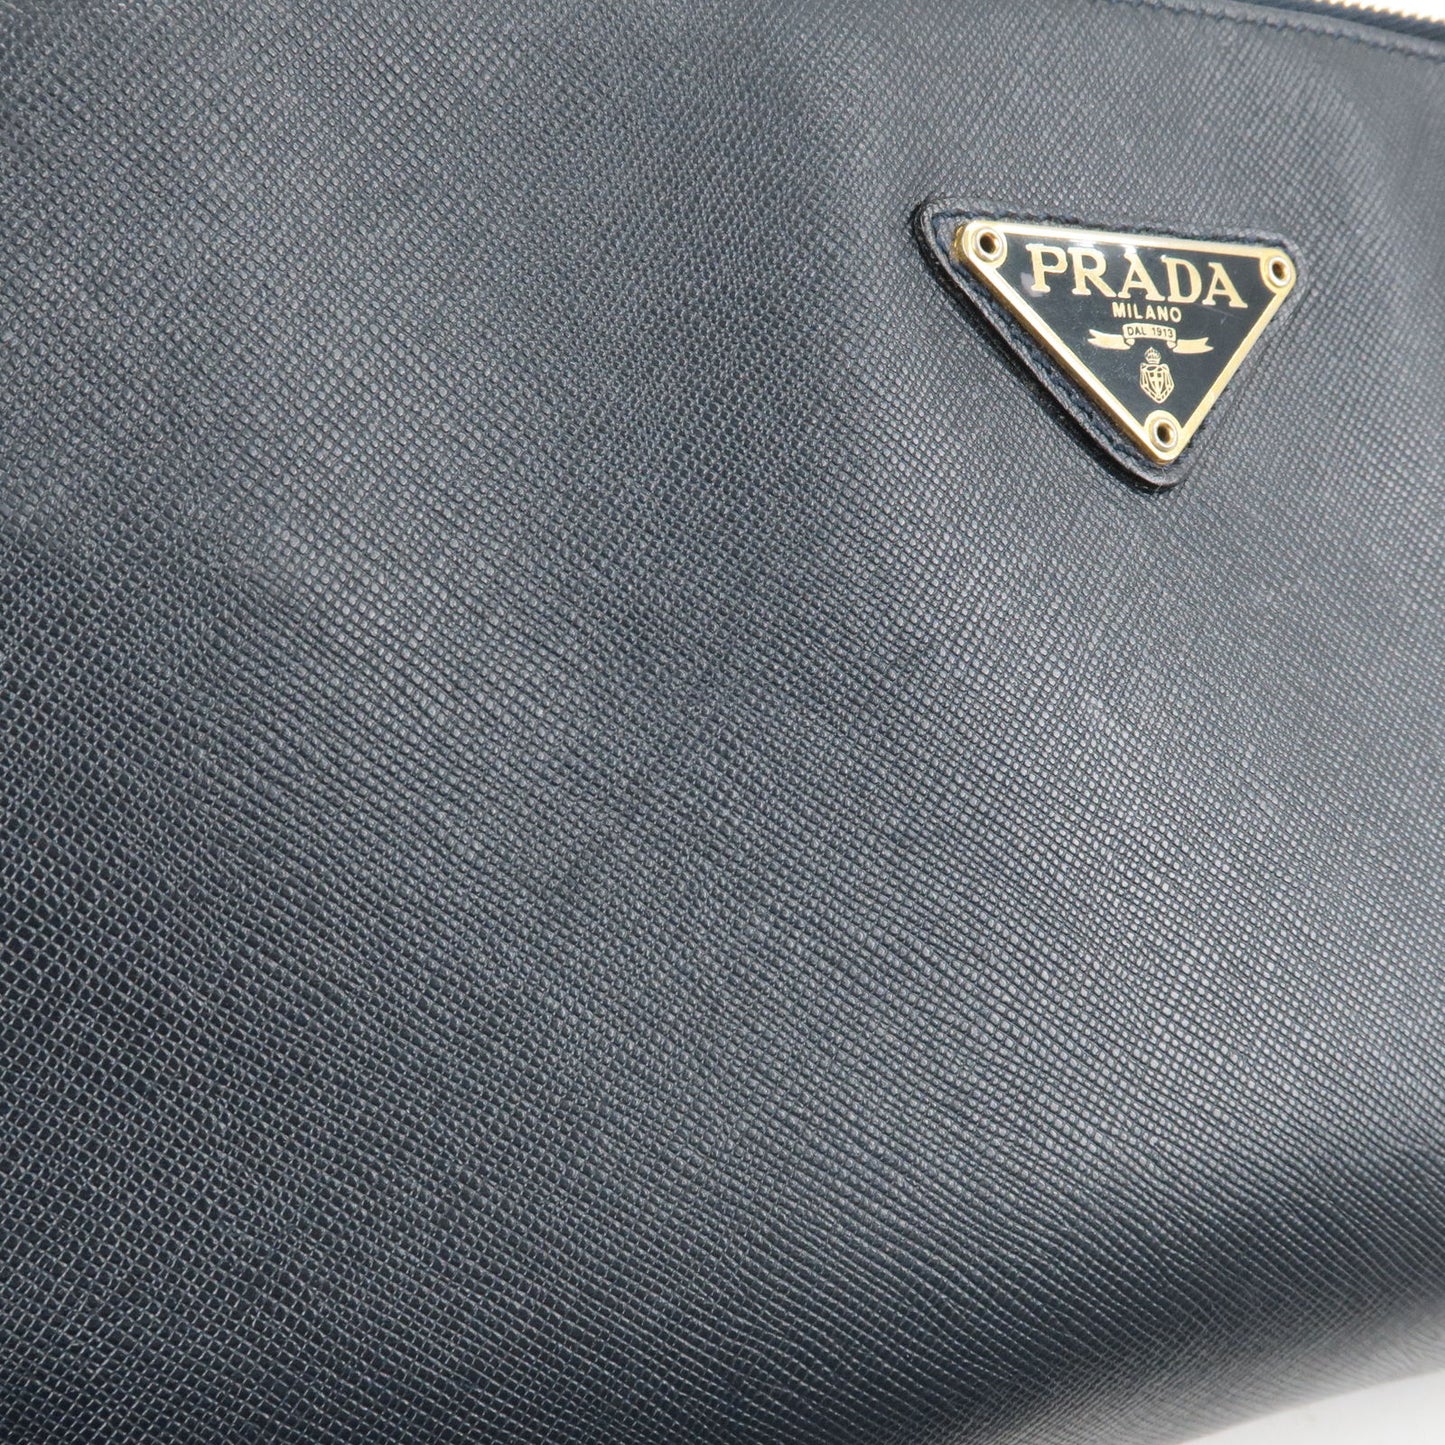 PRADA Logo Leather Clutch Bag Pouch Purse Navy